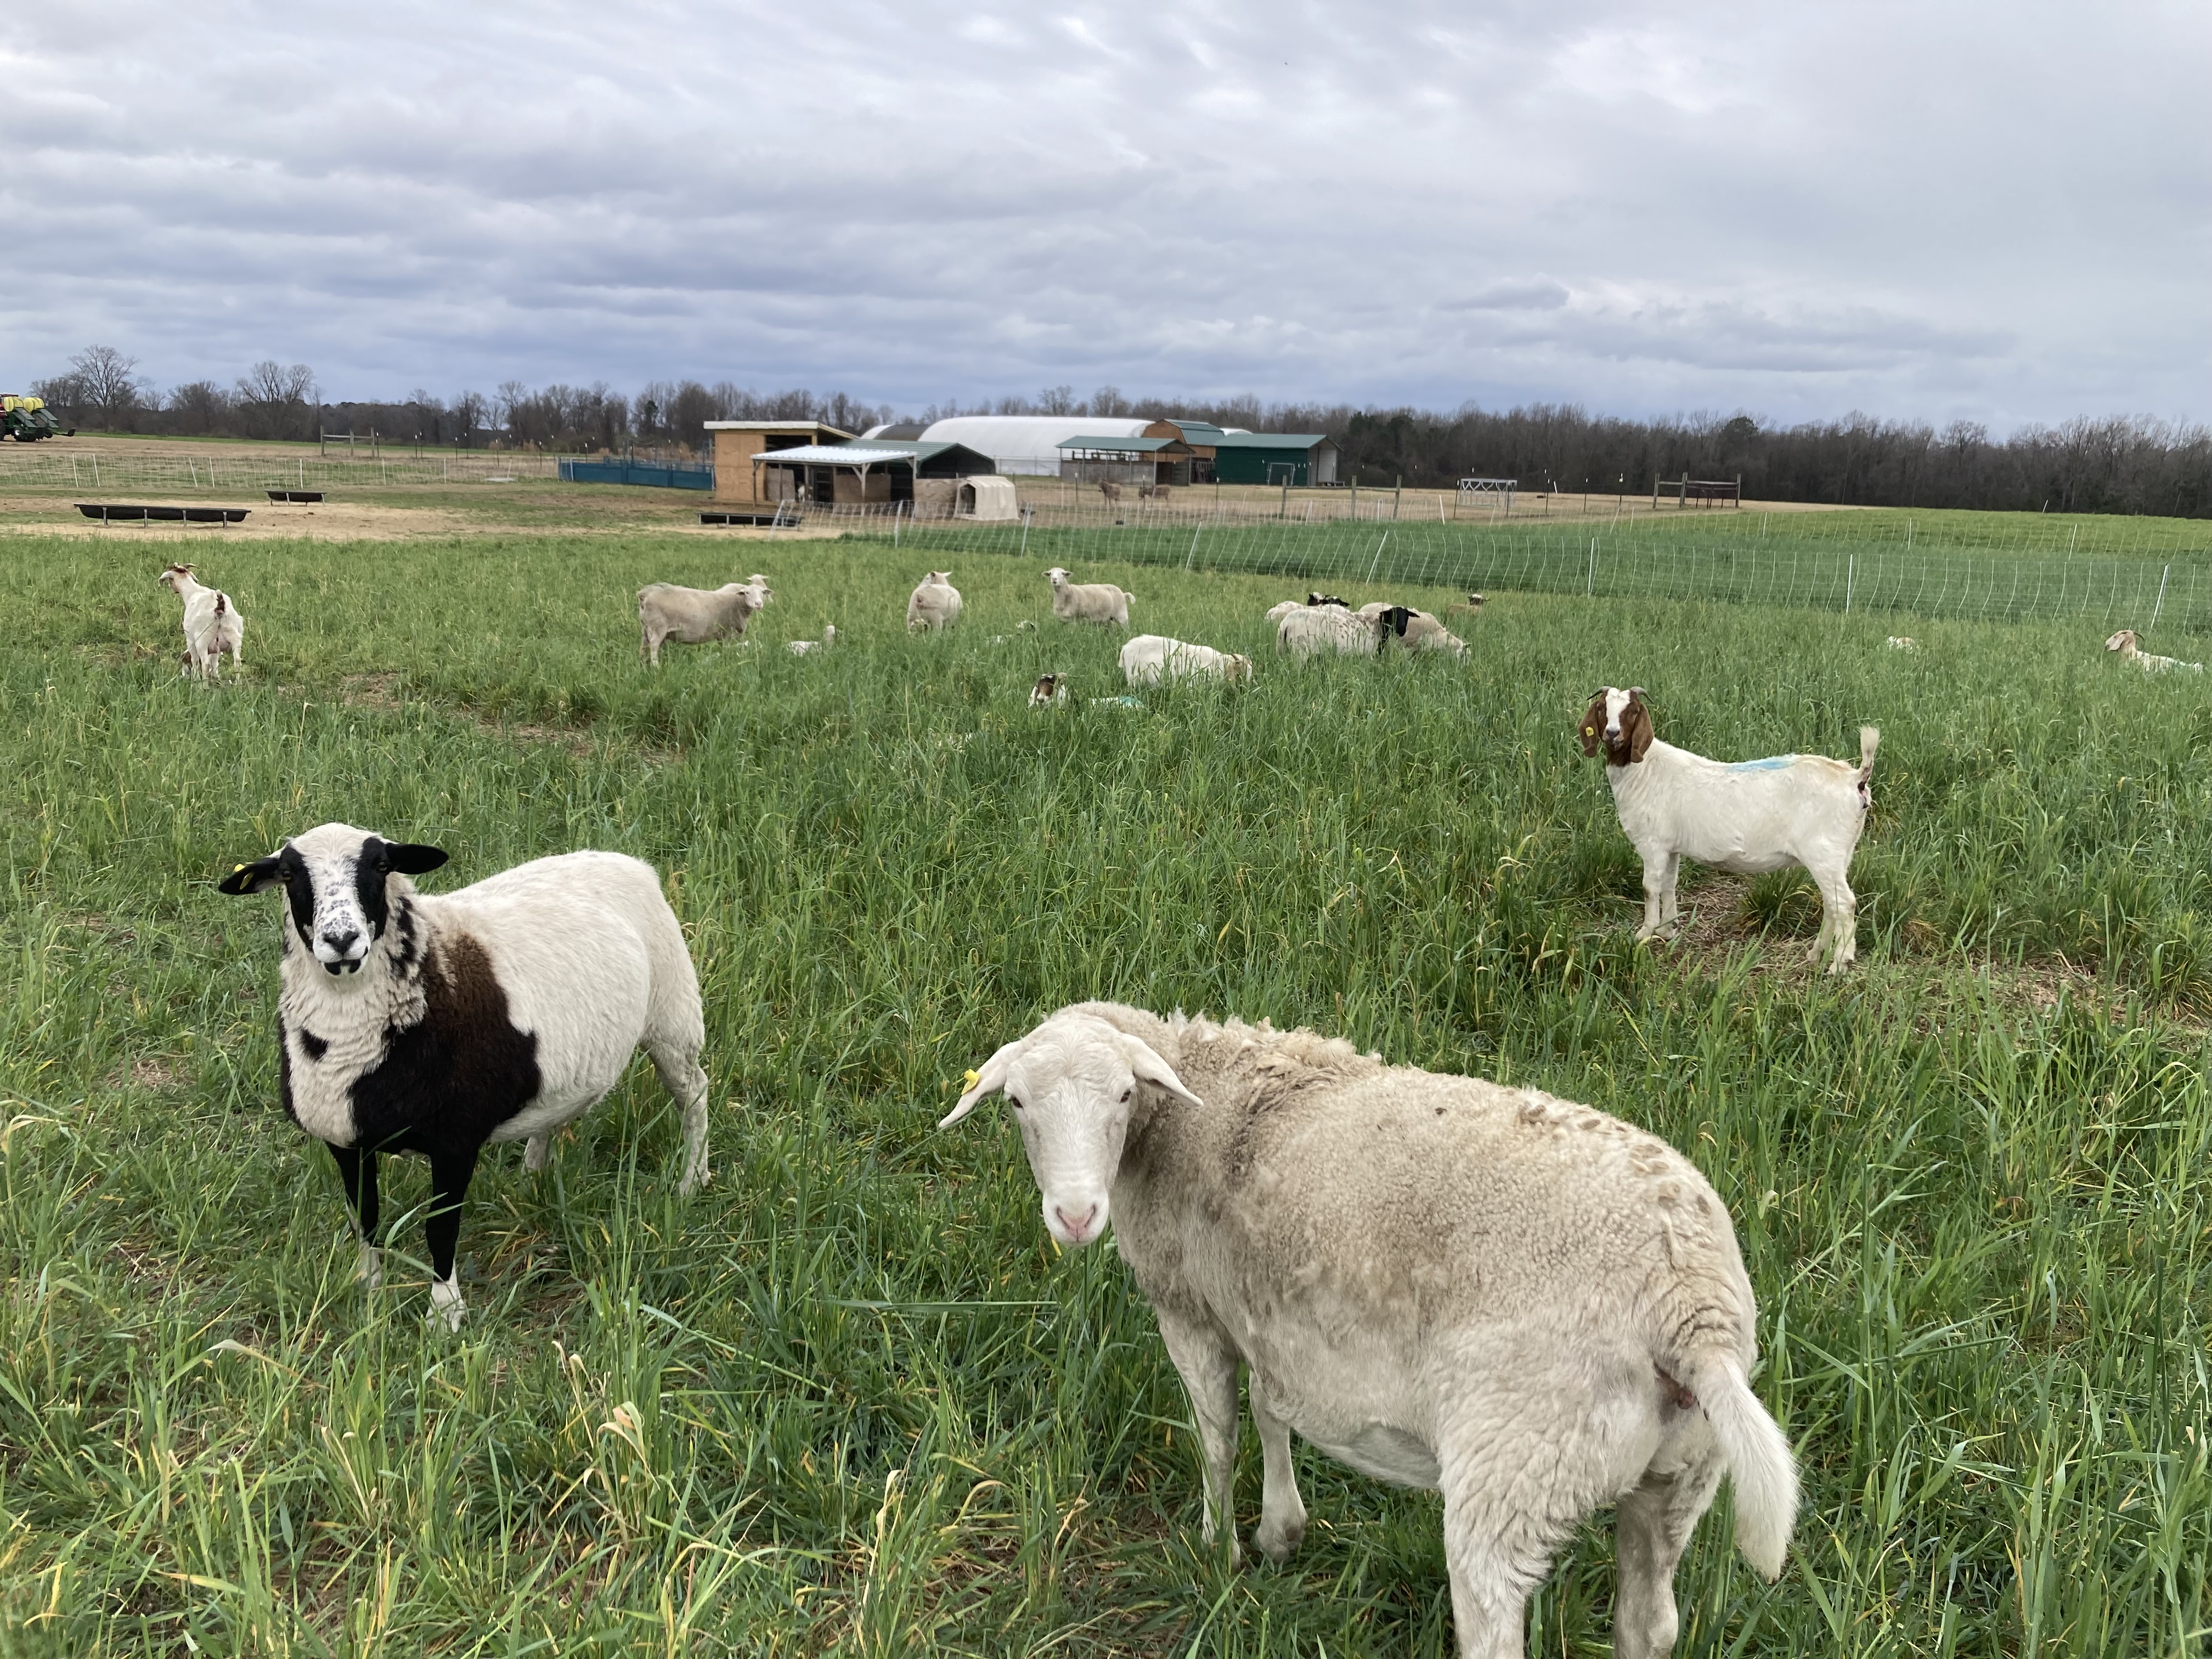 Small ruminants in a field grazing.